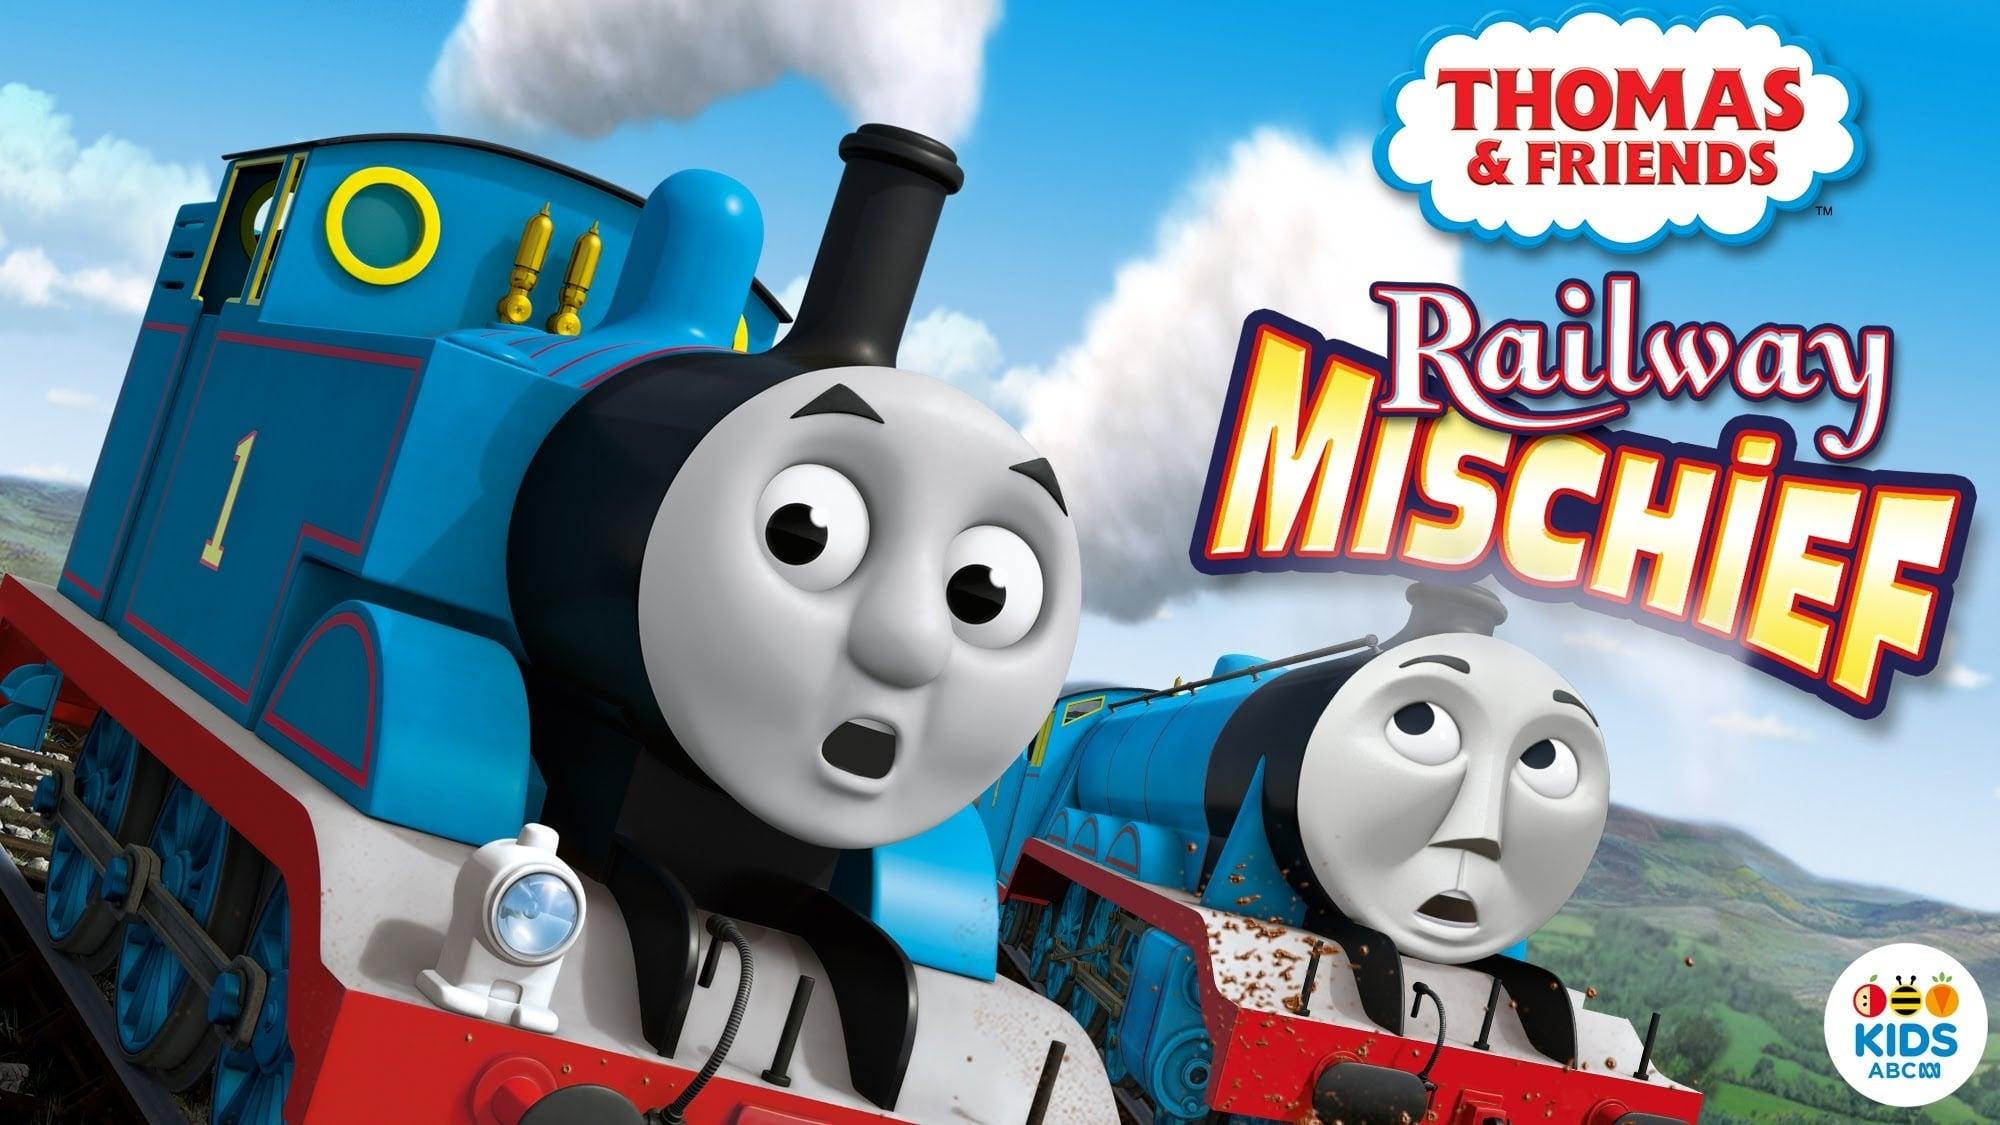 Thomas & Friends: Railway Mischief backdrop